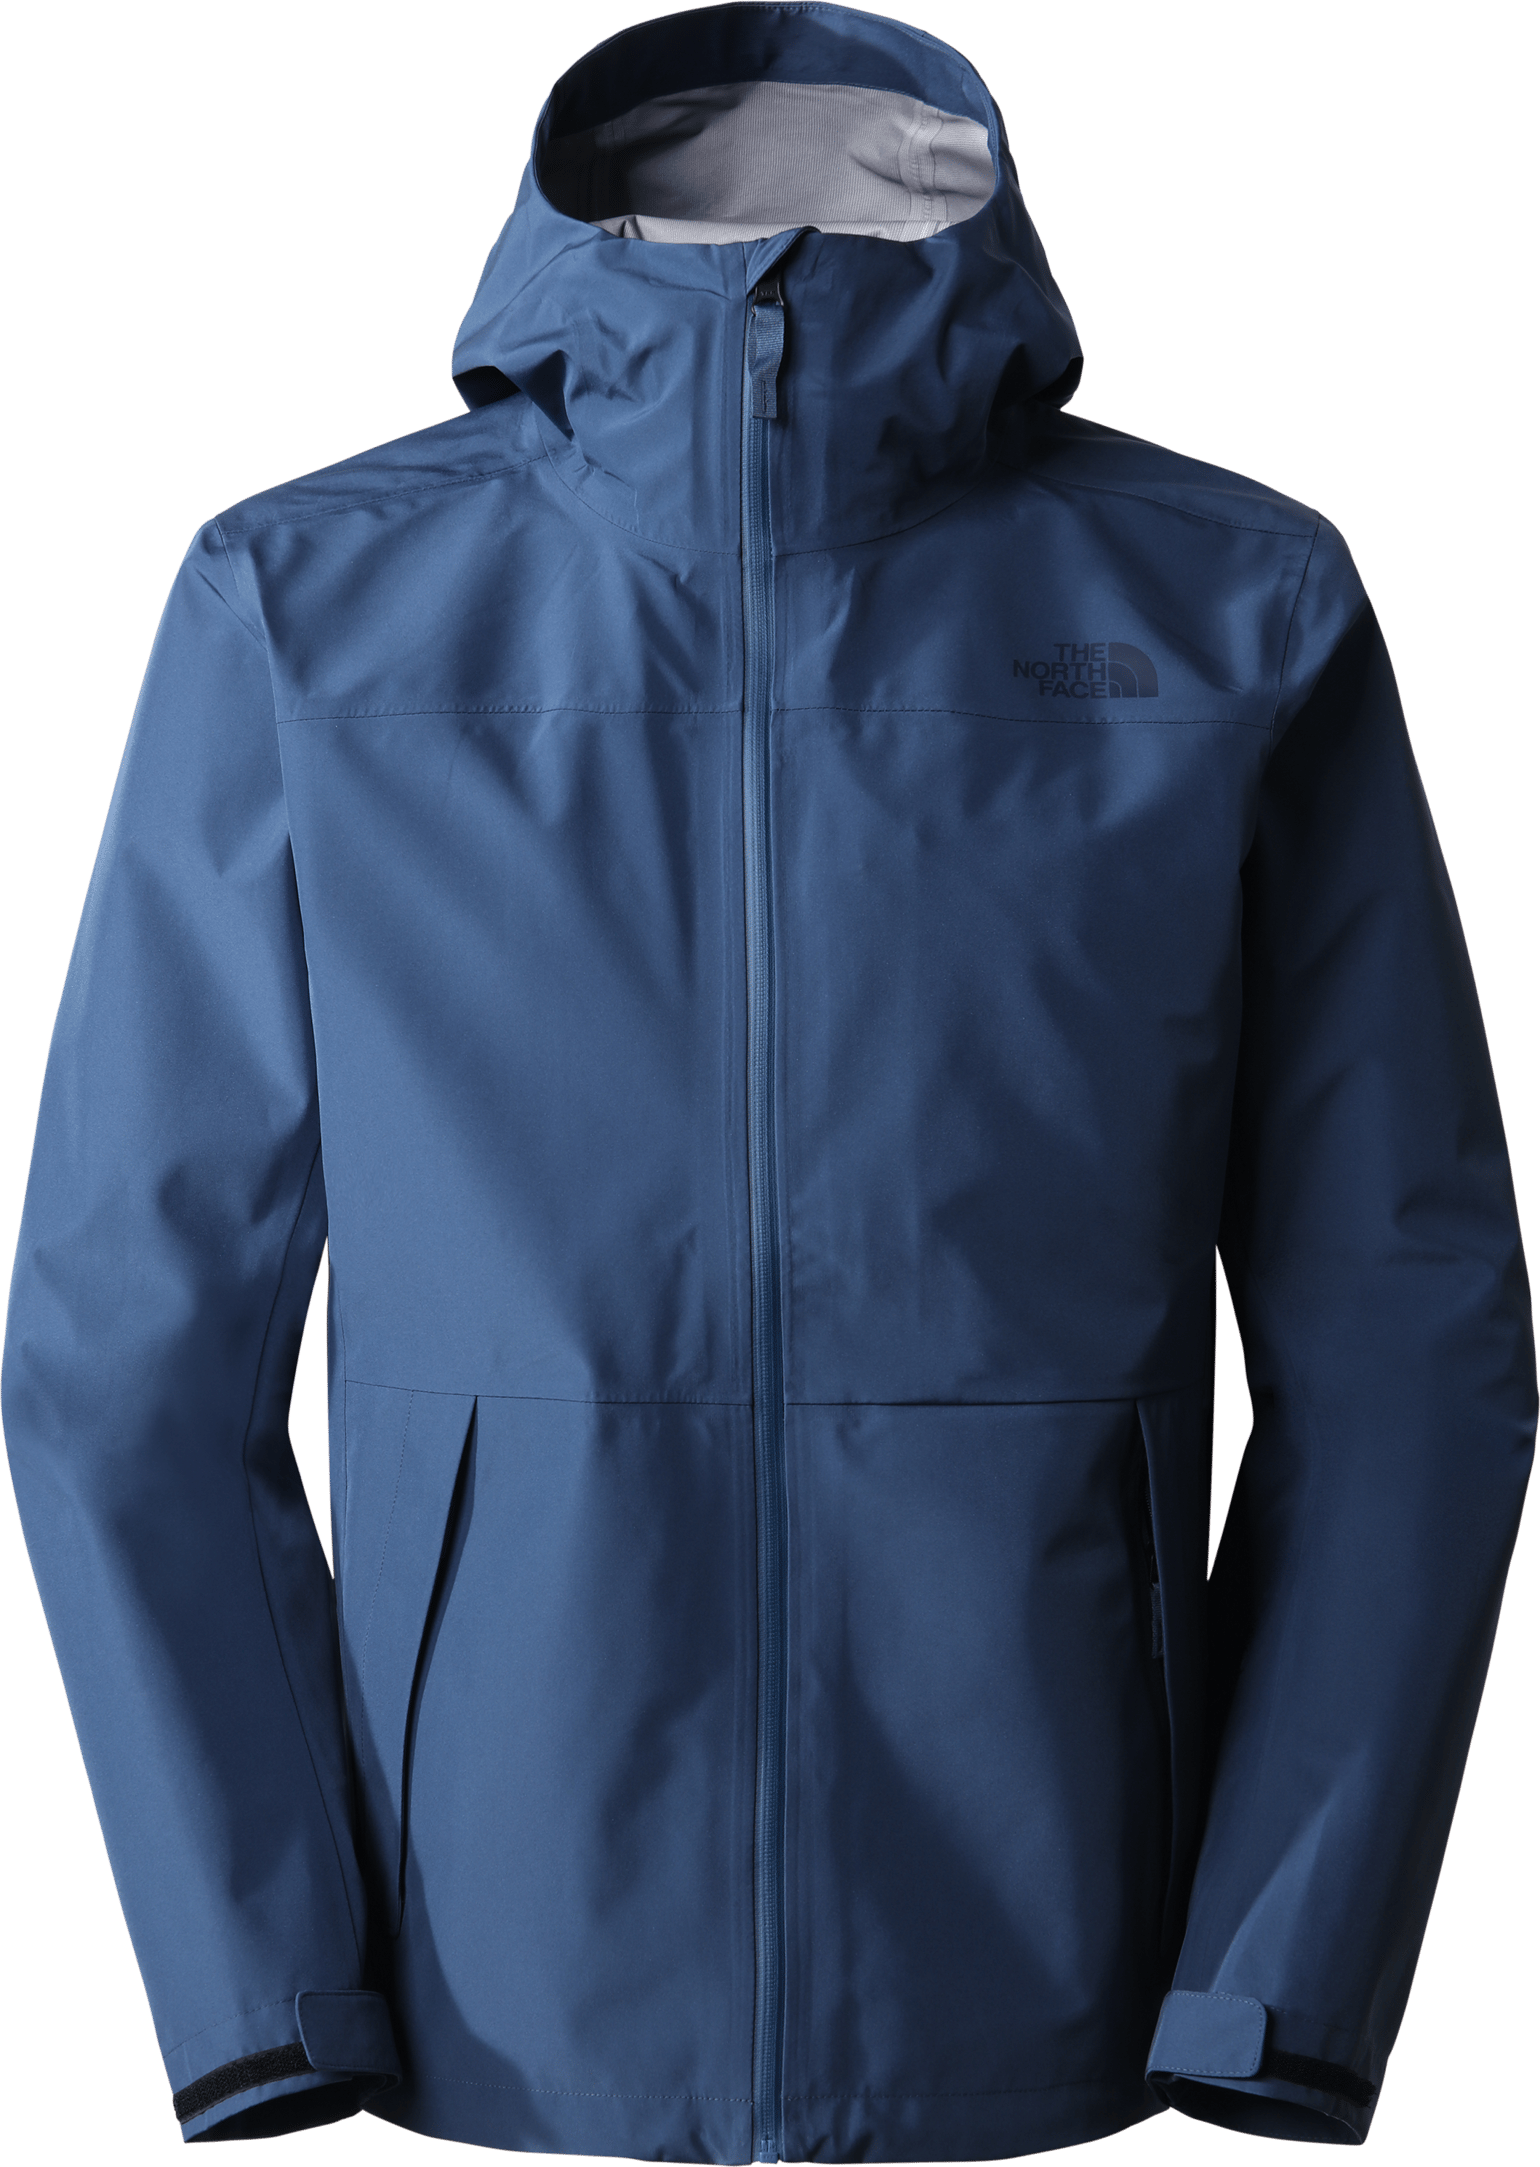 The North Face Men's Dryzzle FutureLight Jacket Shady Blue